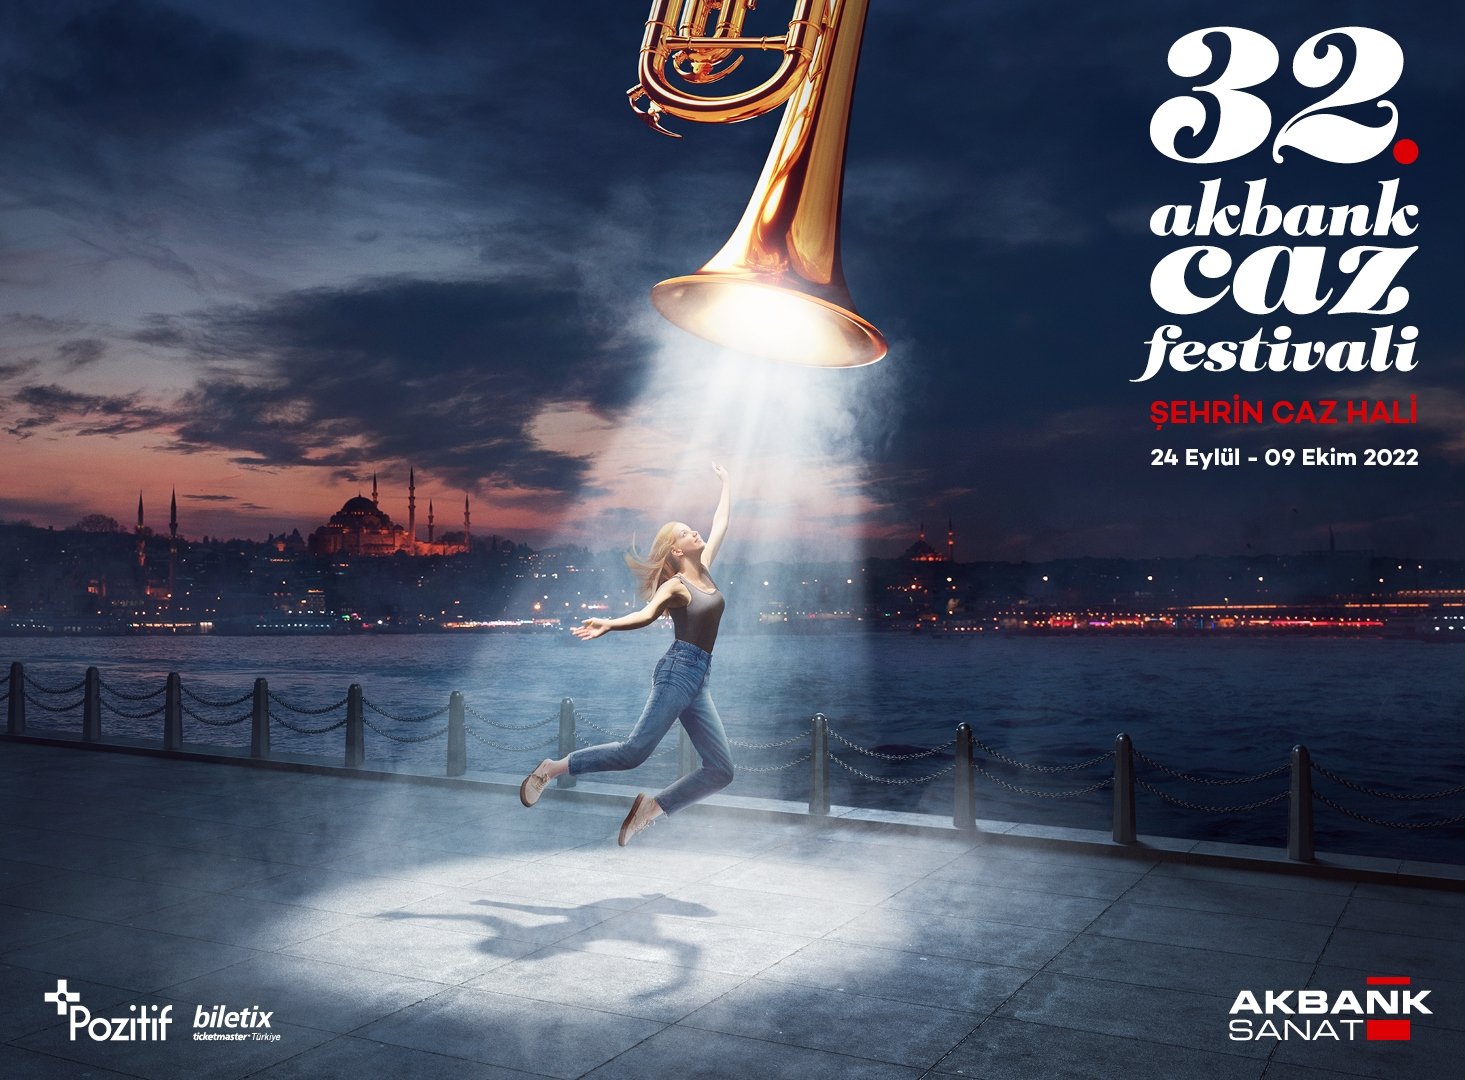 The banner of 32nd Akbank Jazz Festival. (Photo courtesy of Akbank Sanat)